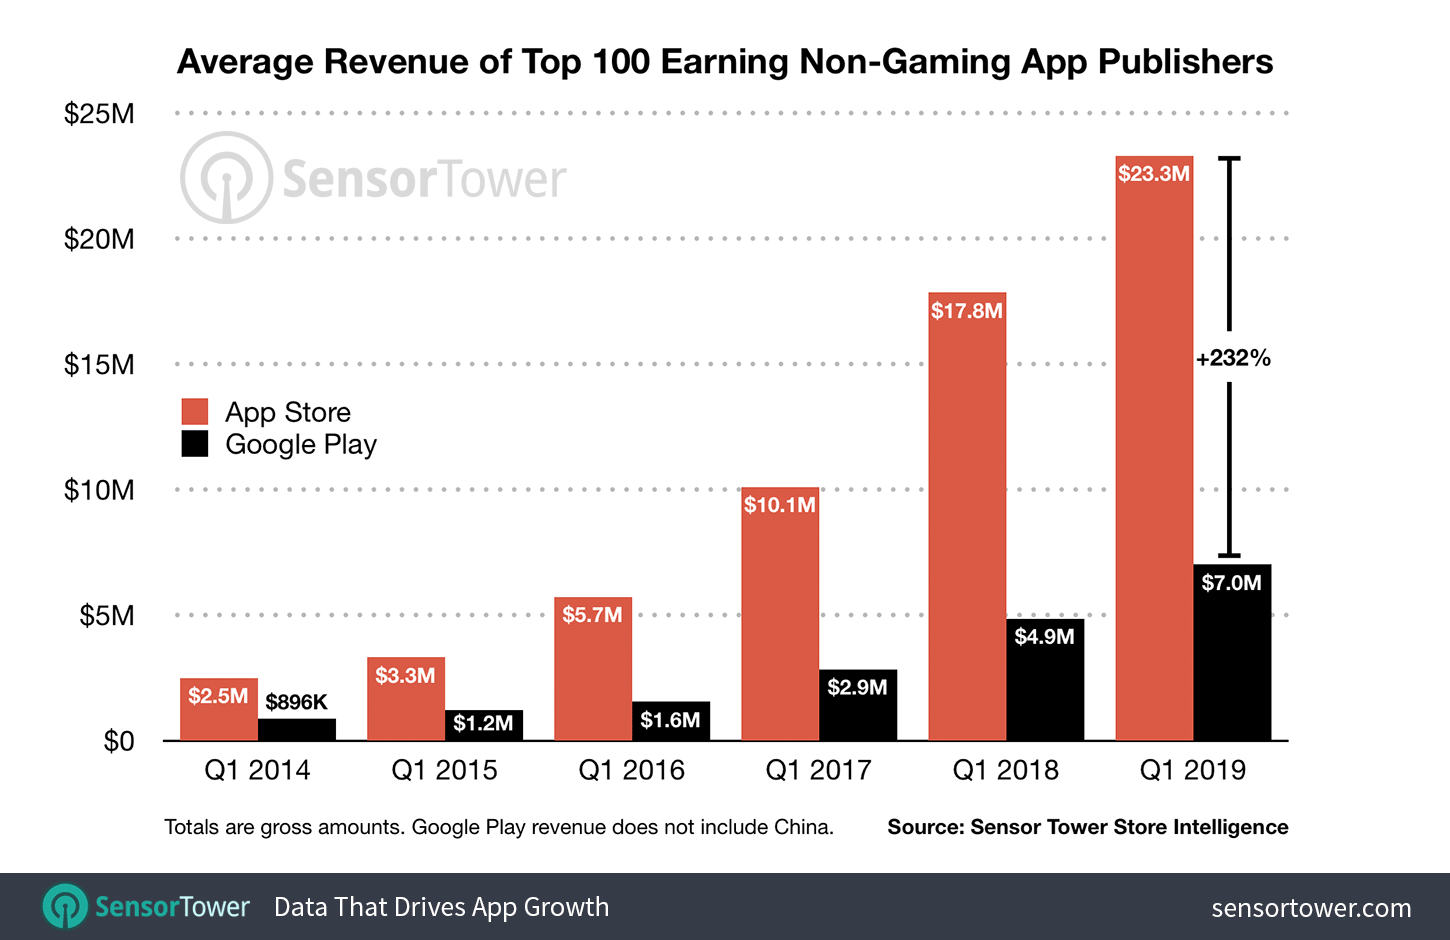 Average Revenue Per Top 100 Non-Gaming App Publishers Q1 2019